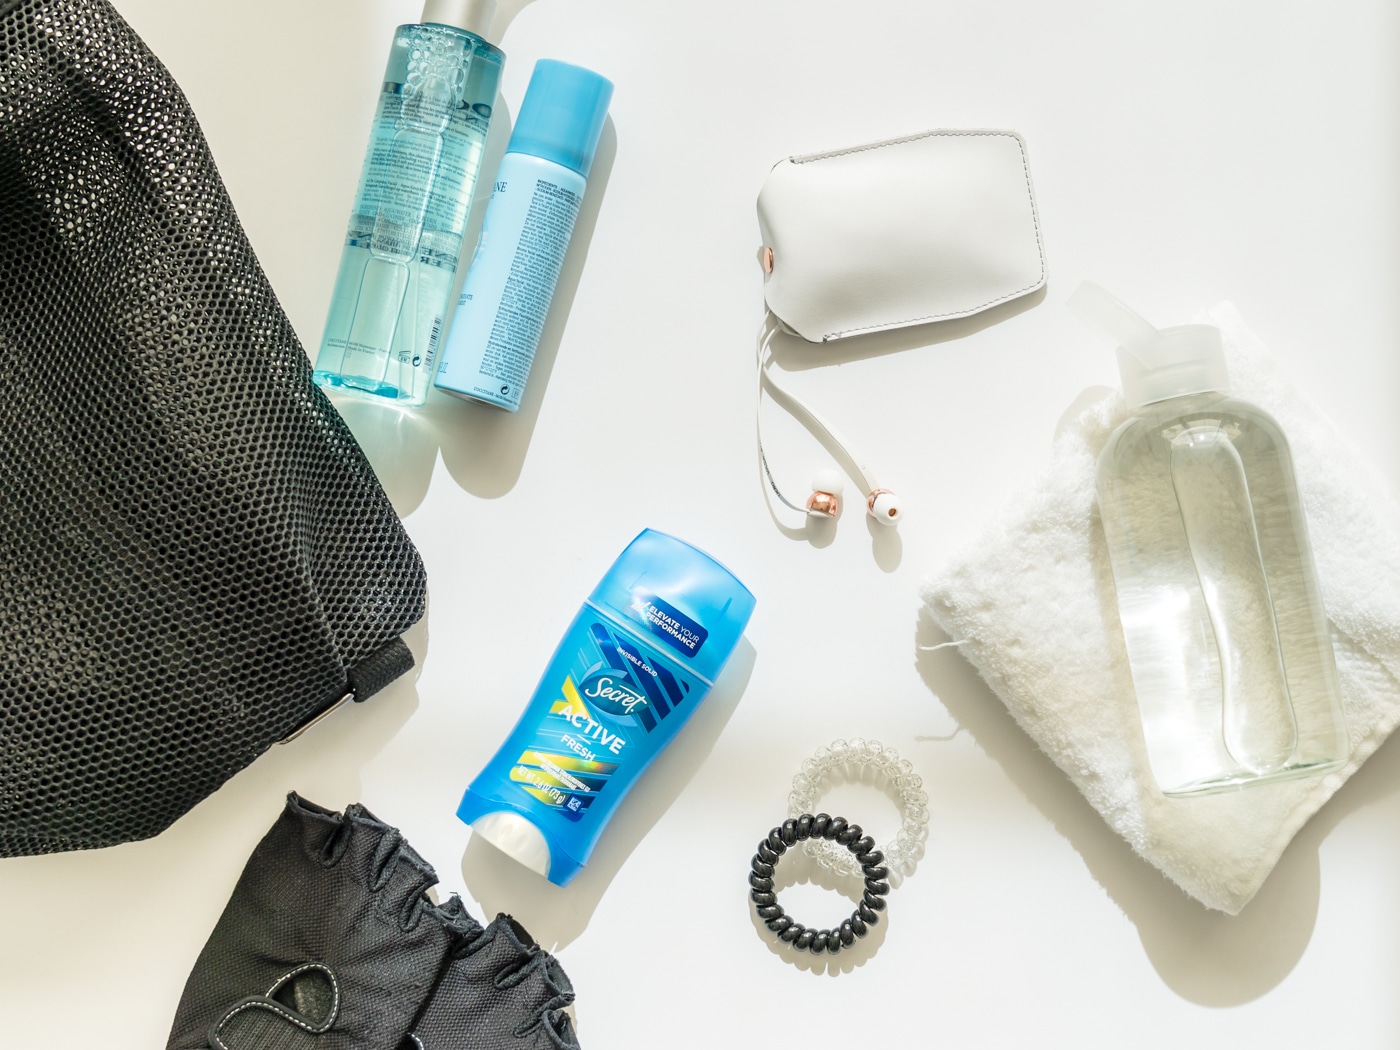 Gym essentials: gloves, earphones, deodorant, water bottle, gym bag